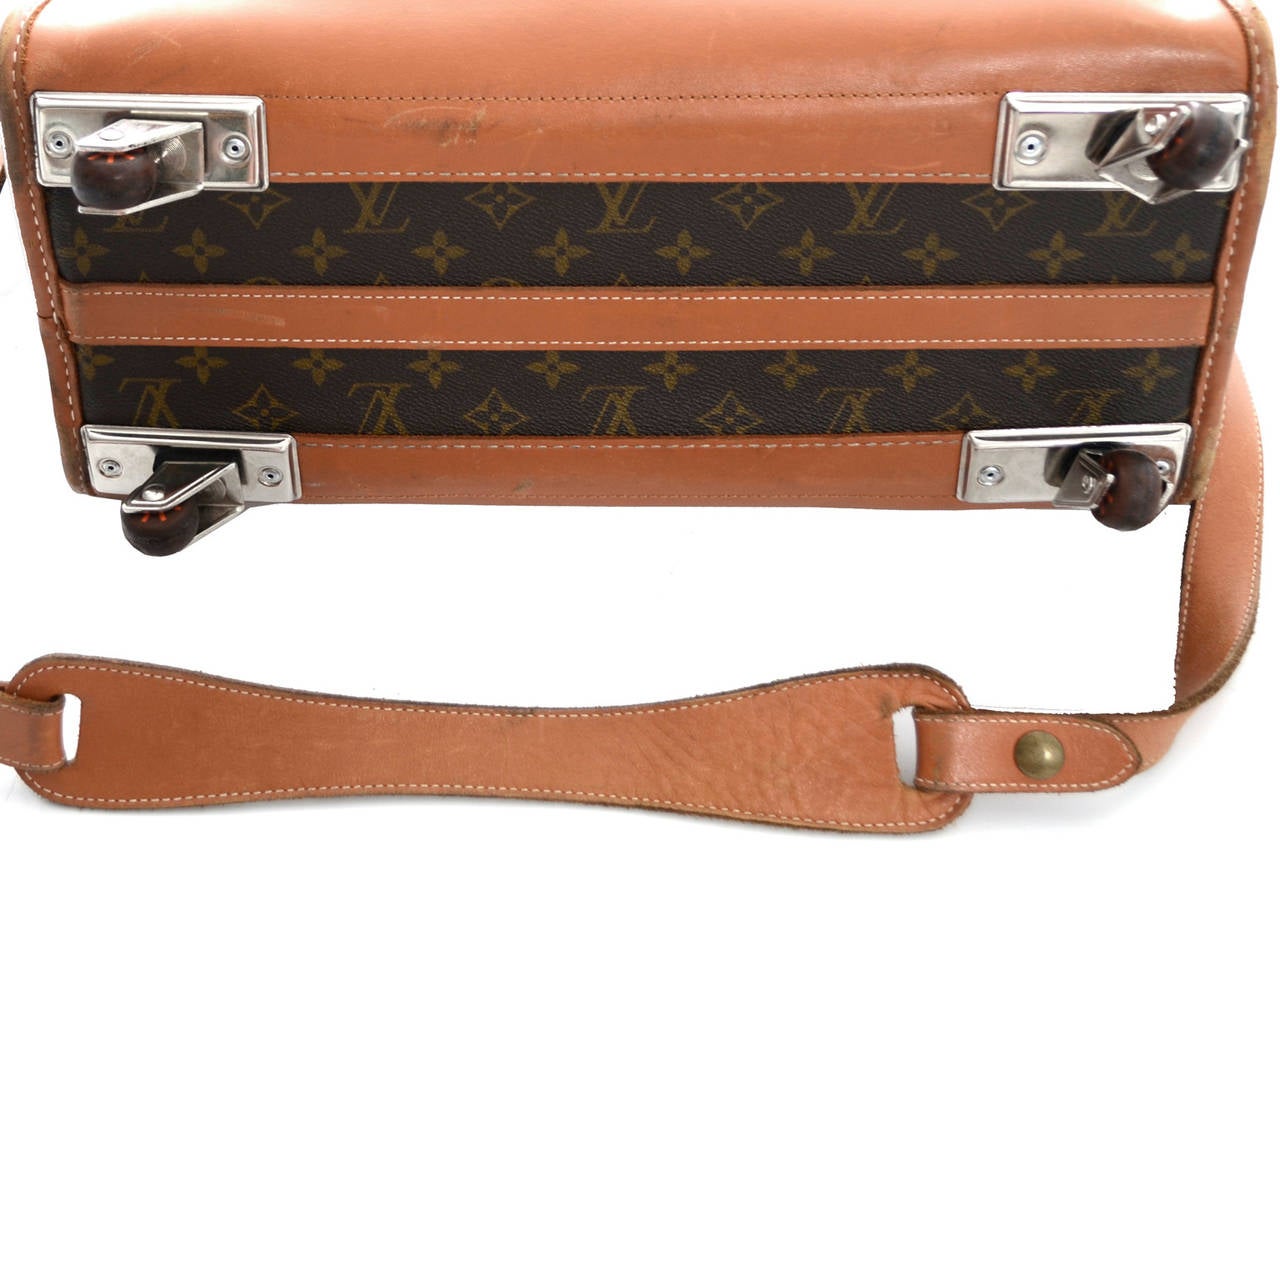 Authentic Vintage Louis Vuitton Rolling Monogram Canvas Weekender Bag Luggage at 1stdibs